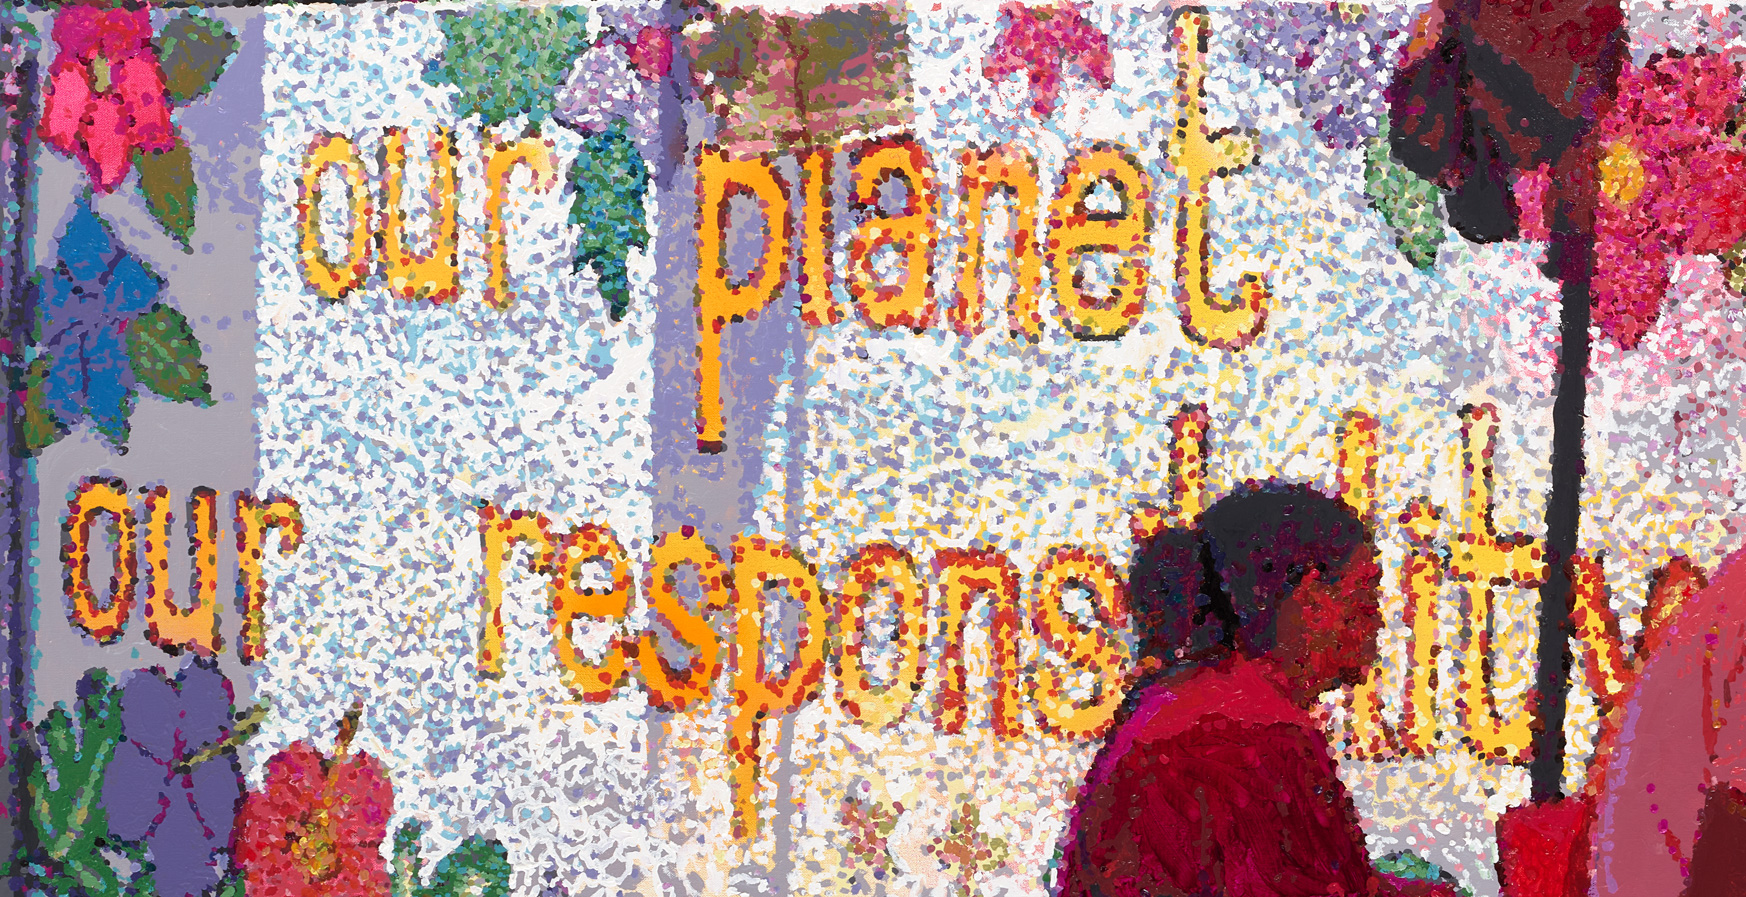 Römer + Römer, Our planet. Our responsibility, 2023, Öl auf Leinwand, 150 x 200 cm. Mauritius. Mahebourg